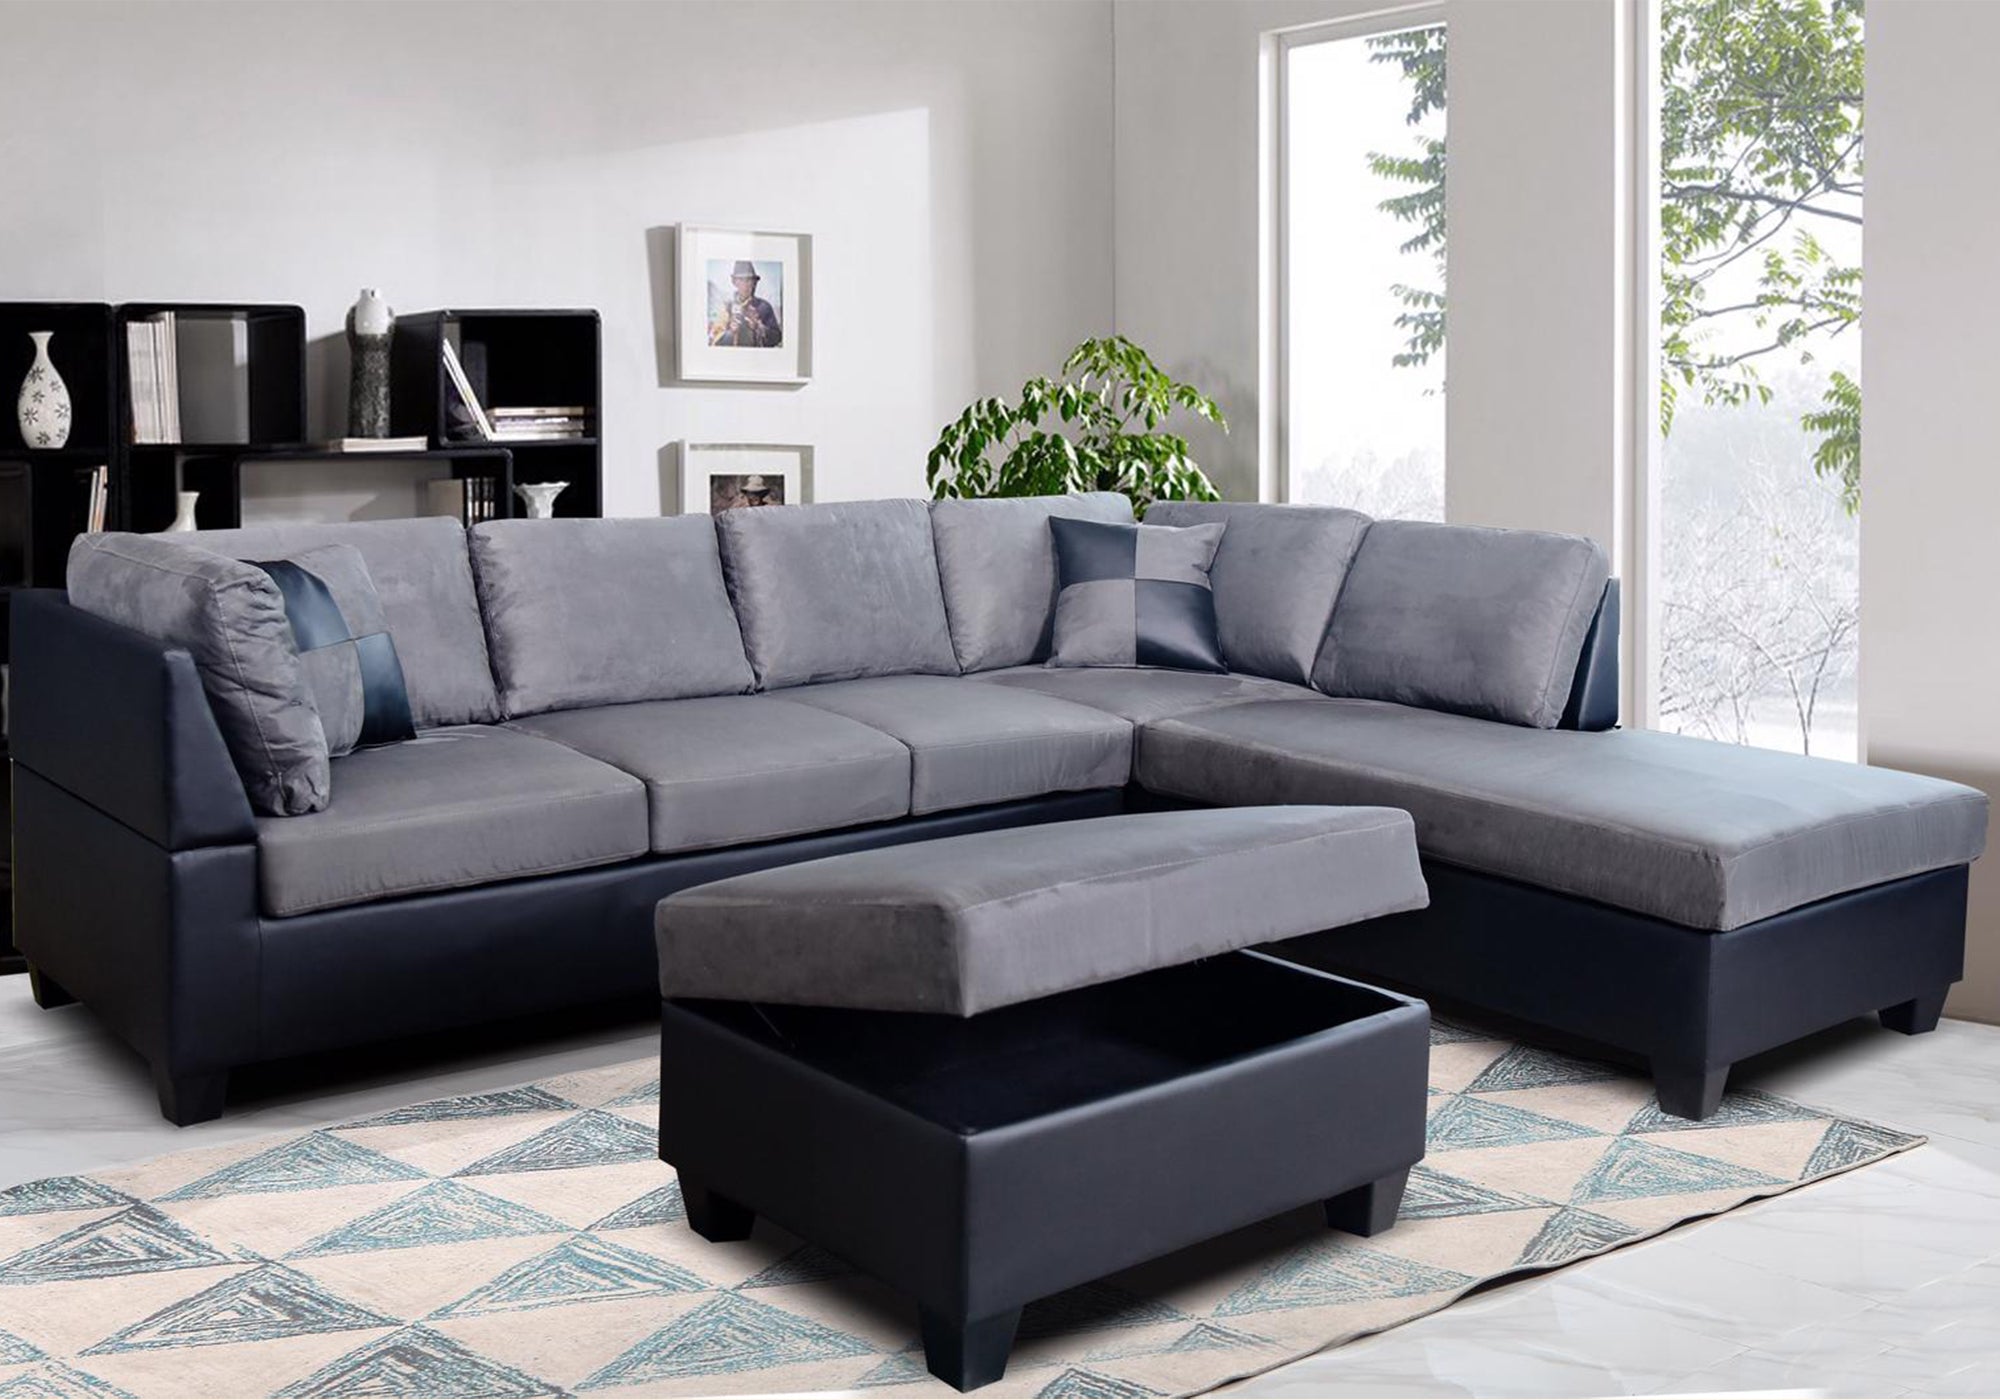 sofa sectional with ottoman grey